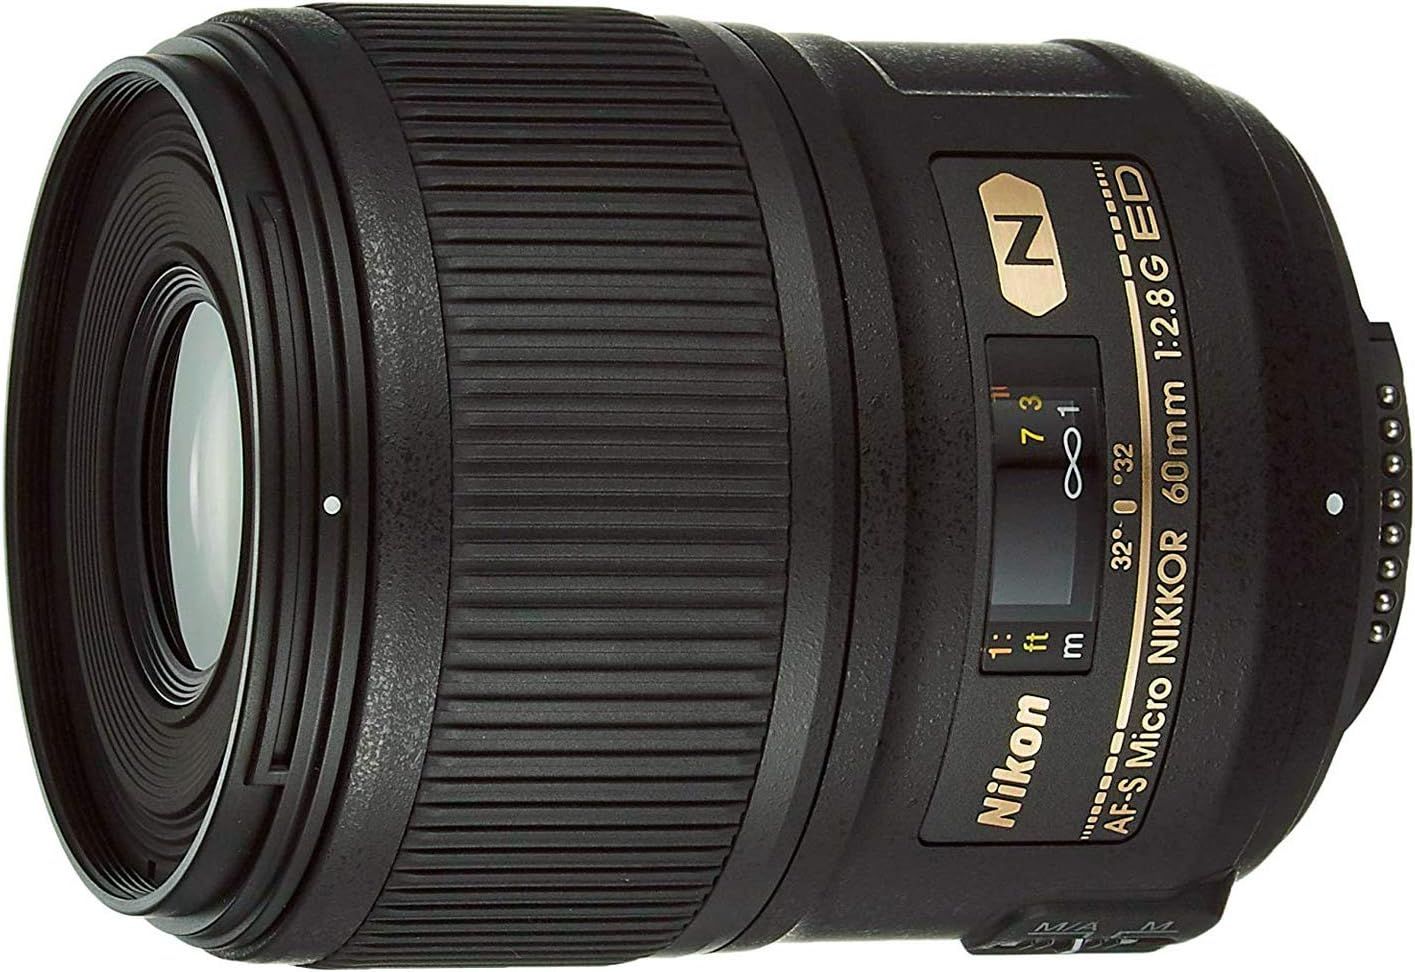 USED - Nikon AF-S 60mm f/2.8G Micro ED - English